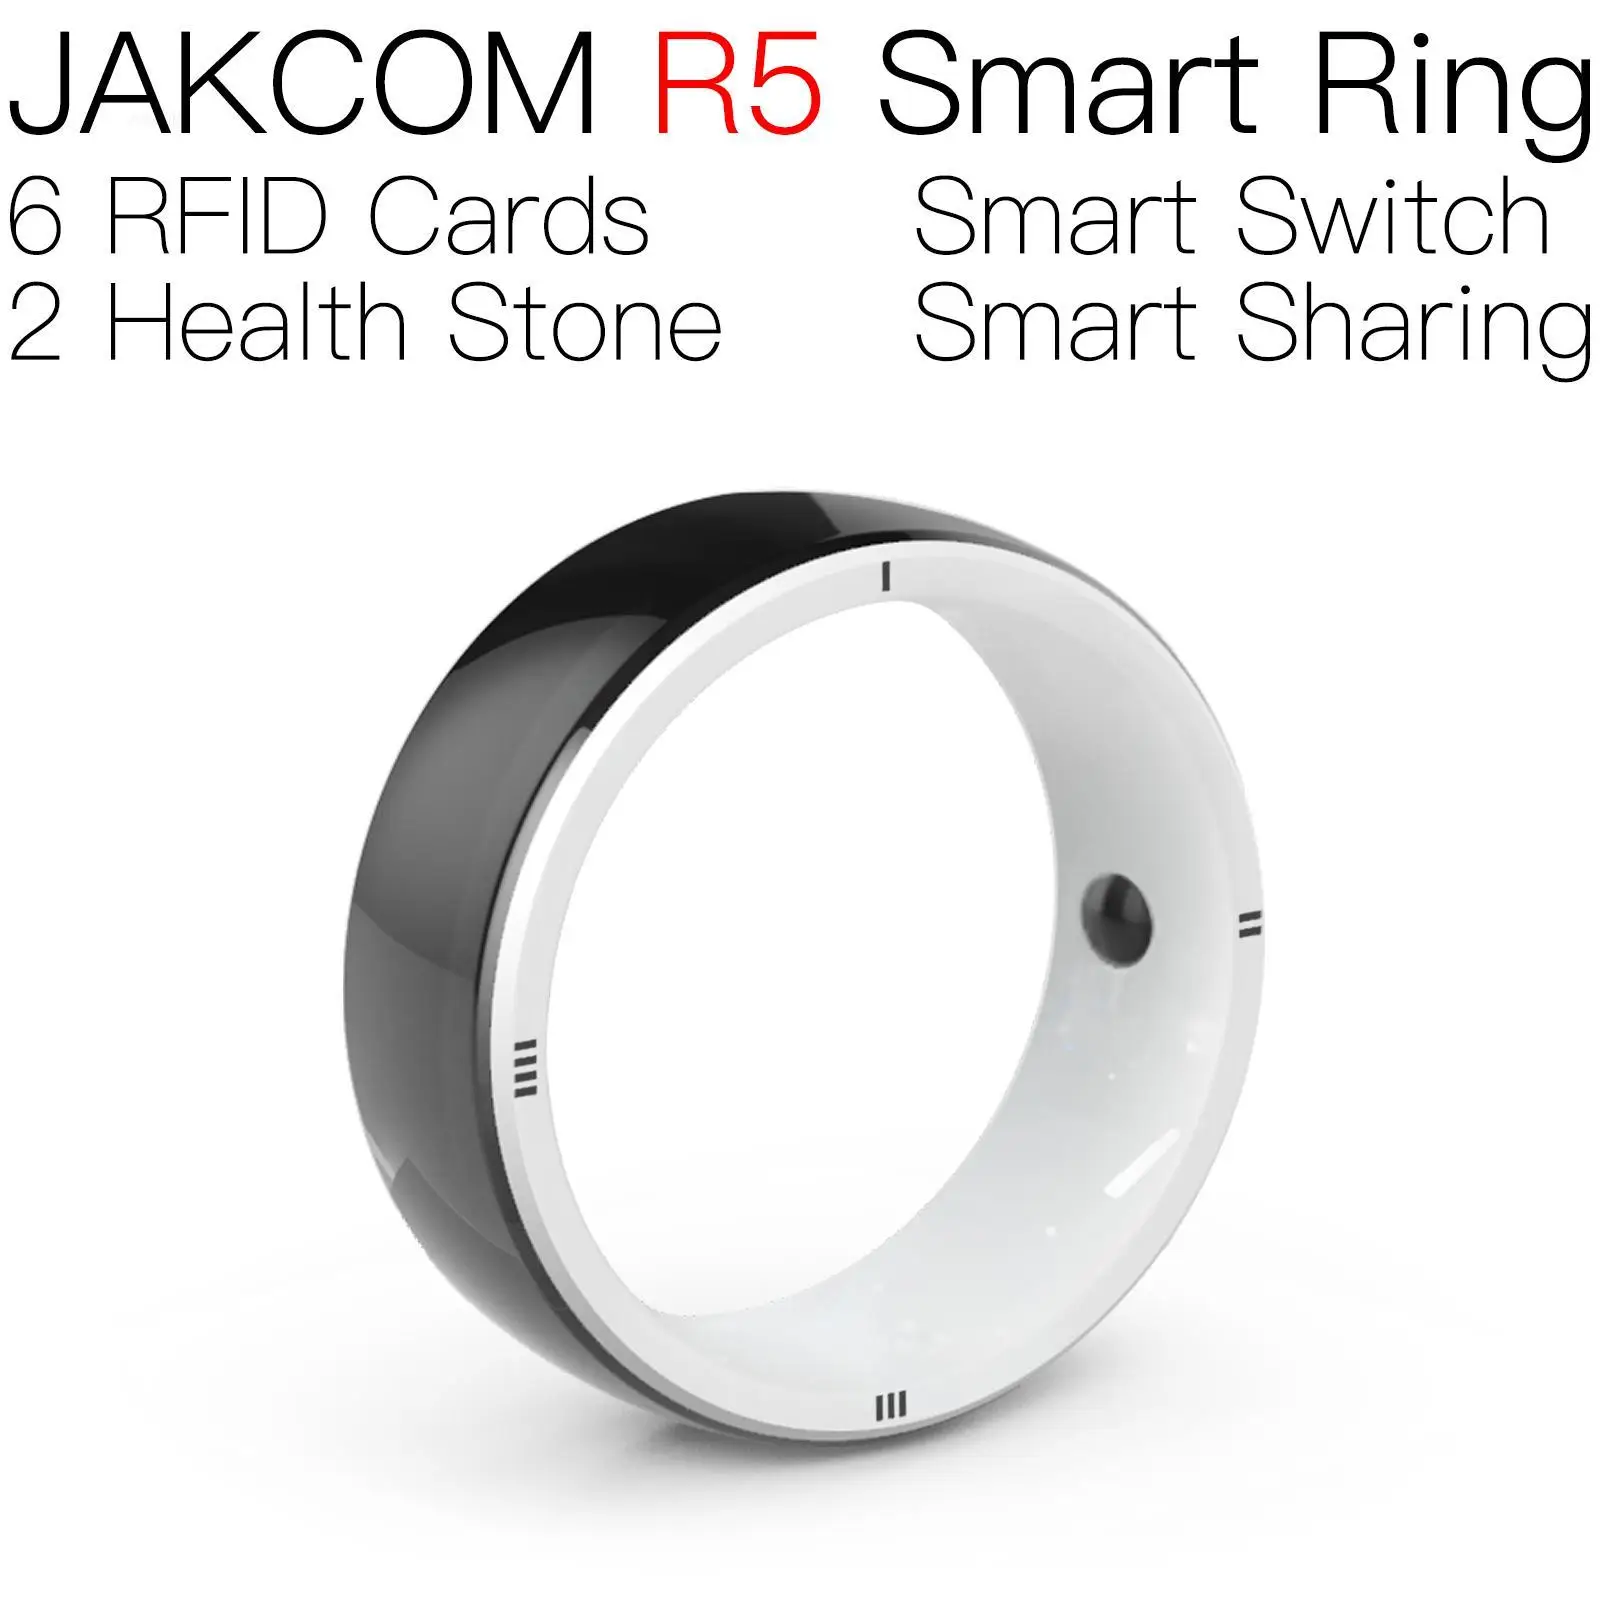 

JAKCOM R5 Smart Ring Nice than rfid copy 125 splatoon pull uhf tag hunter cat nfc iso 15693 card changeable id ic read write